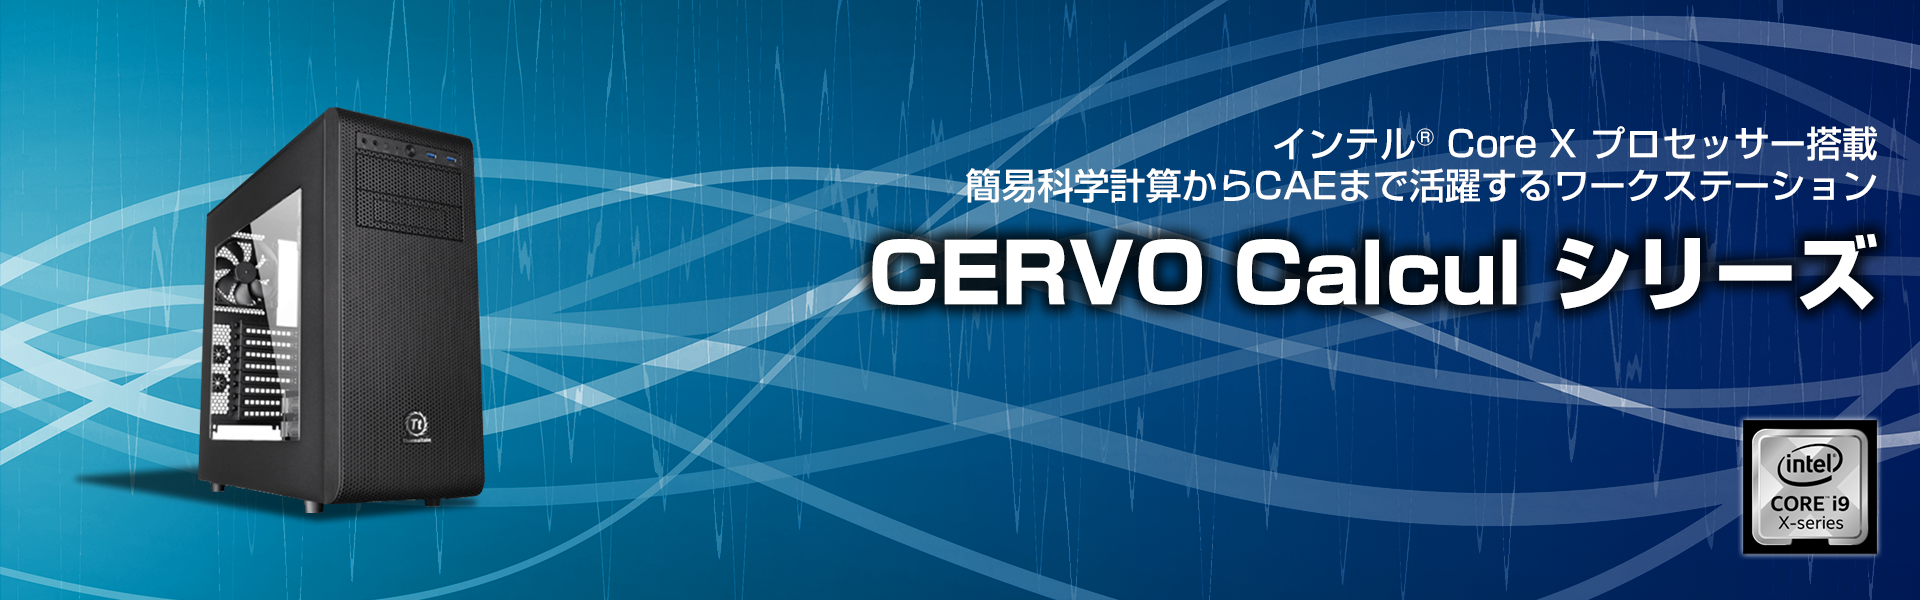 CERVO Calculシリーズ